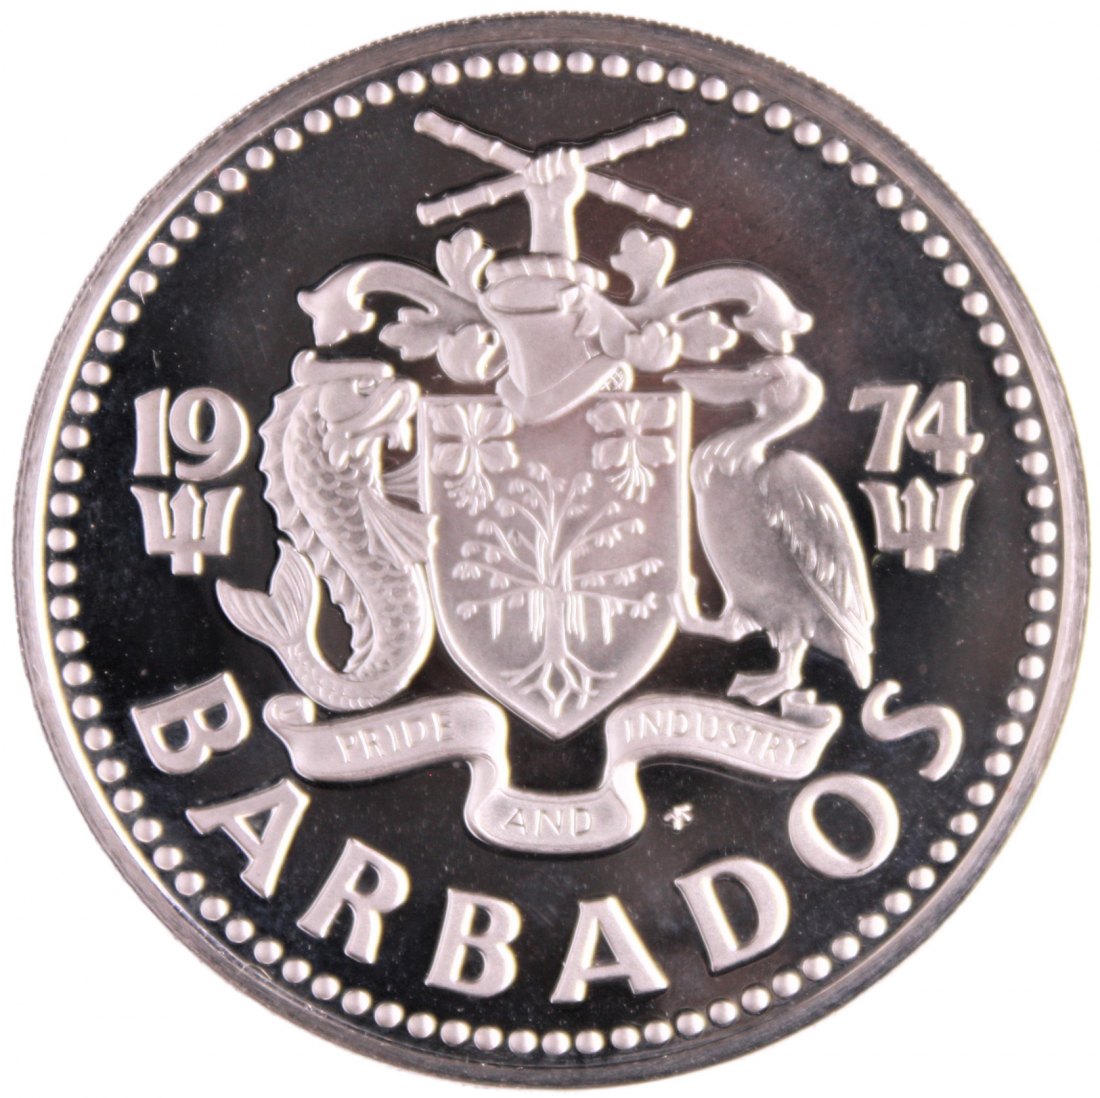  Barbados: 5 Dollar 1974, Springbrunnen, 31,1 gr. 800er Silber, nur 12.000 Exemplare!   